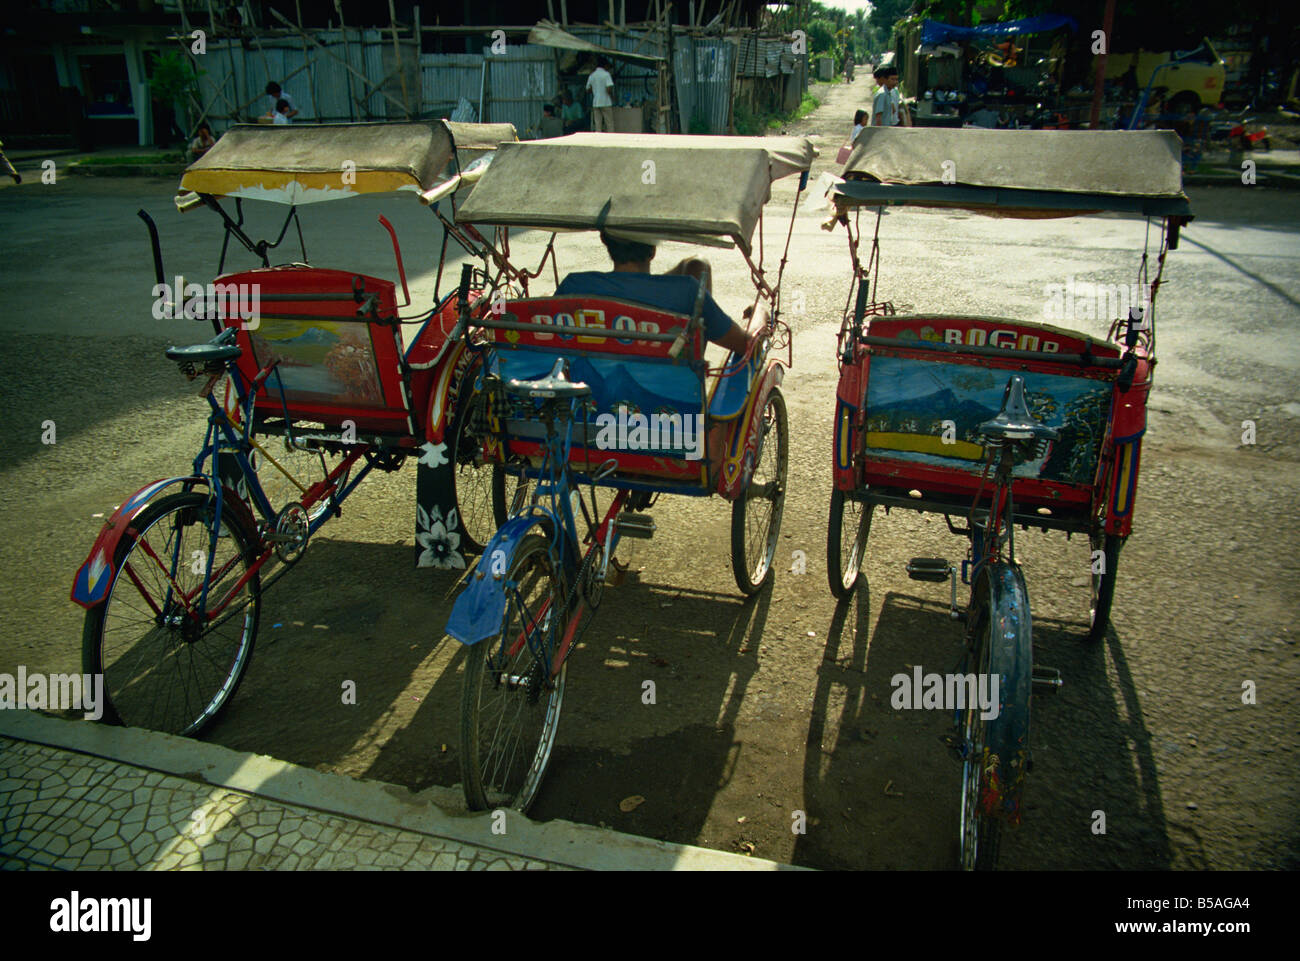 Parked becaks (trishaws), Bogor, West Java, Indonesia, Southeast Asia Stock Photo